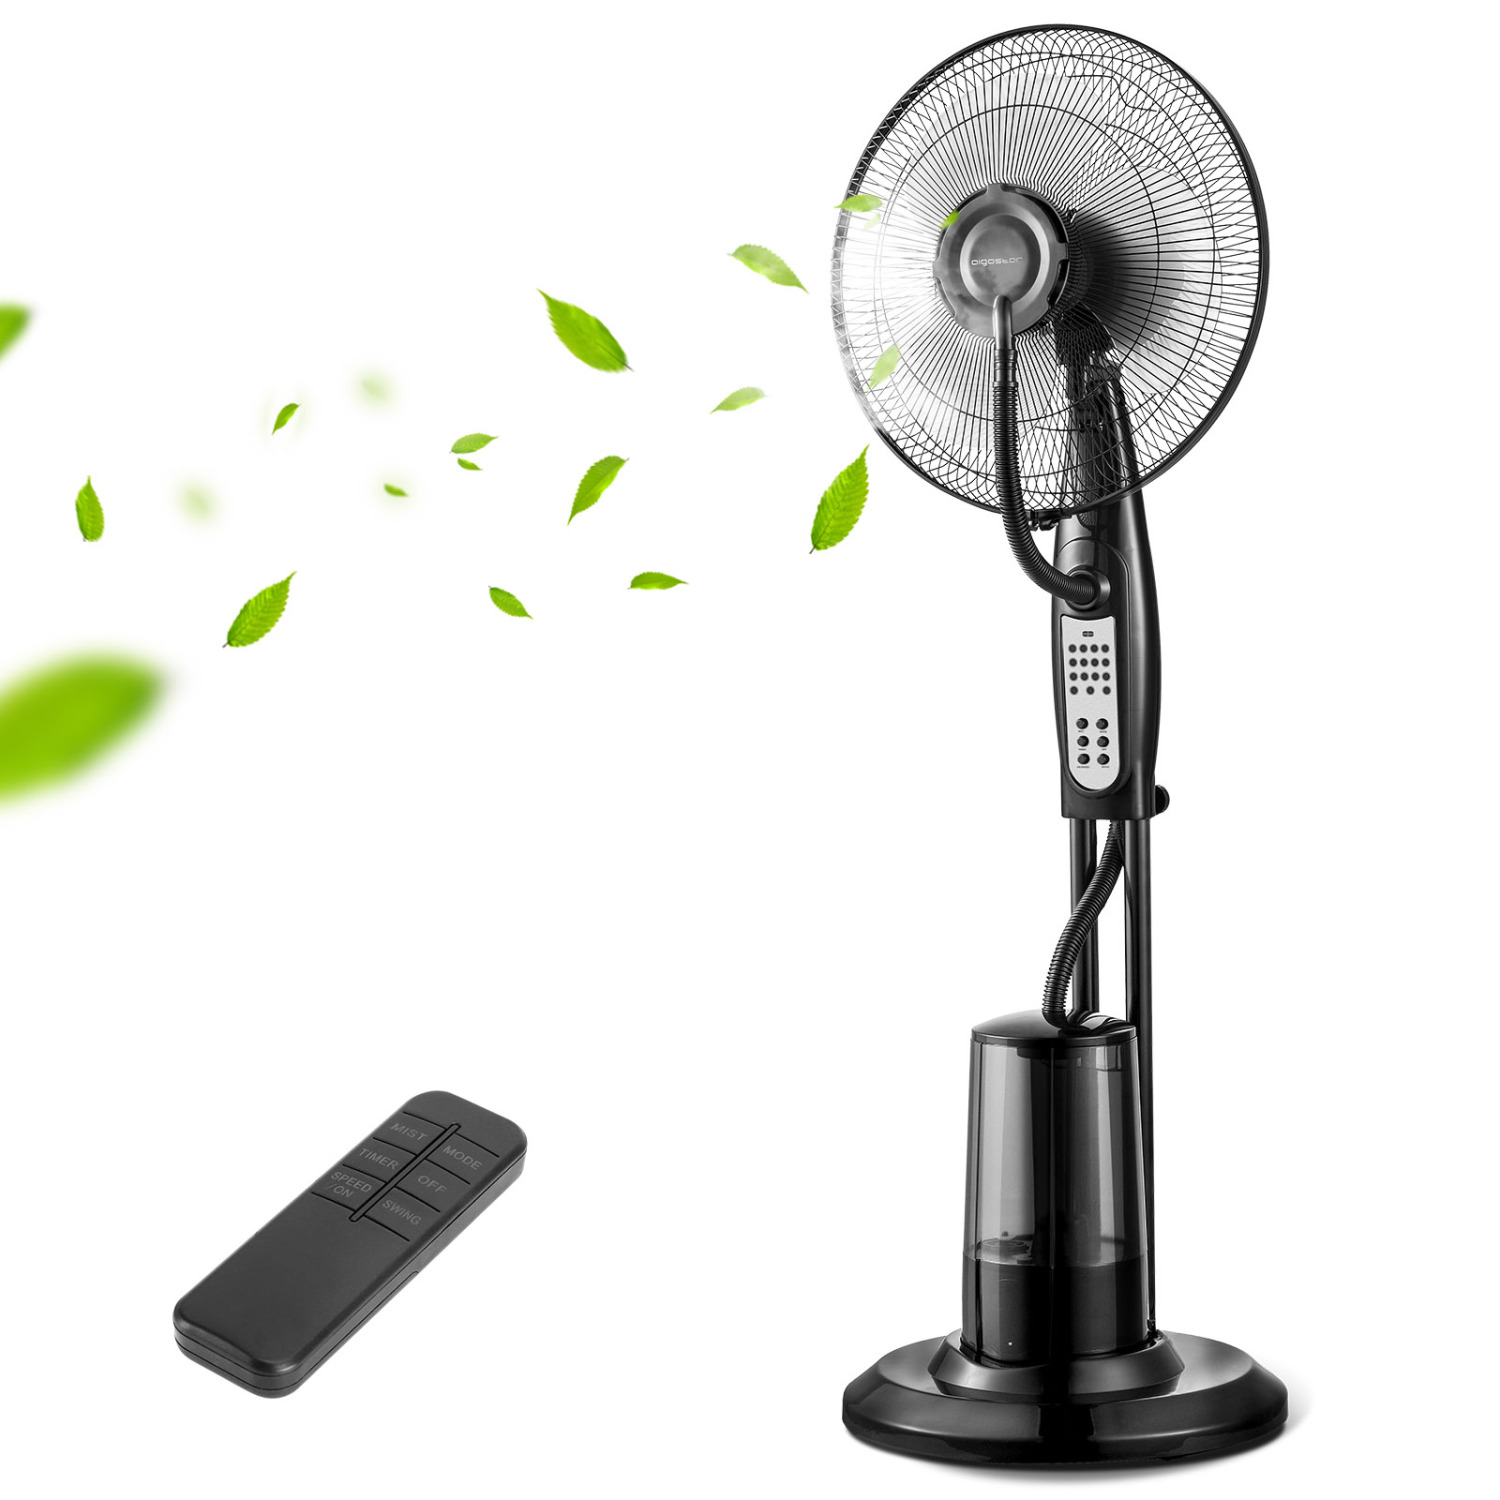 Aigostar Breeze -  Ventilador de pie con nebulizador de agua, oscilante, mando a distancia, temporizador, 3 modos, 3 velocidades, 75W, flujo de aire 22m/s, nebulización ultrasónica. Diseño exclusivo